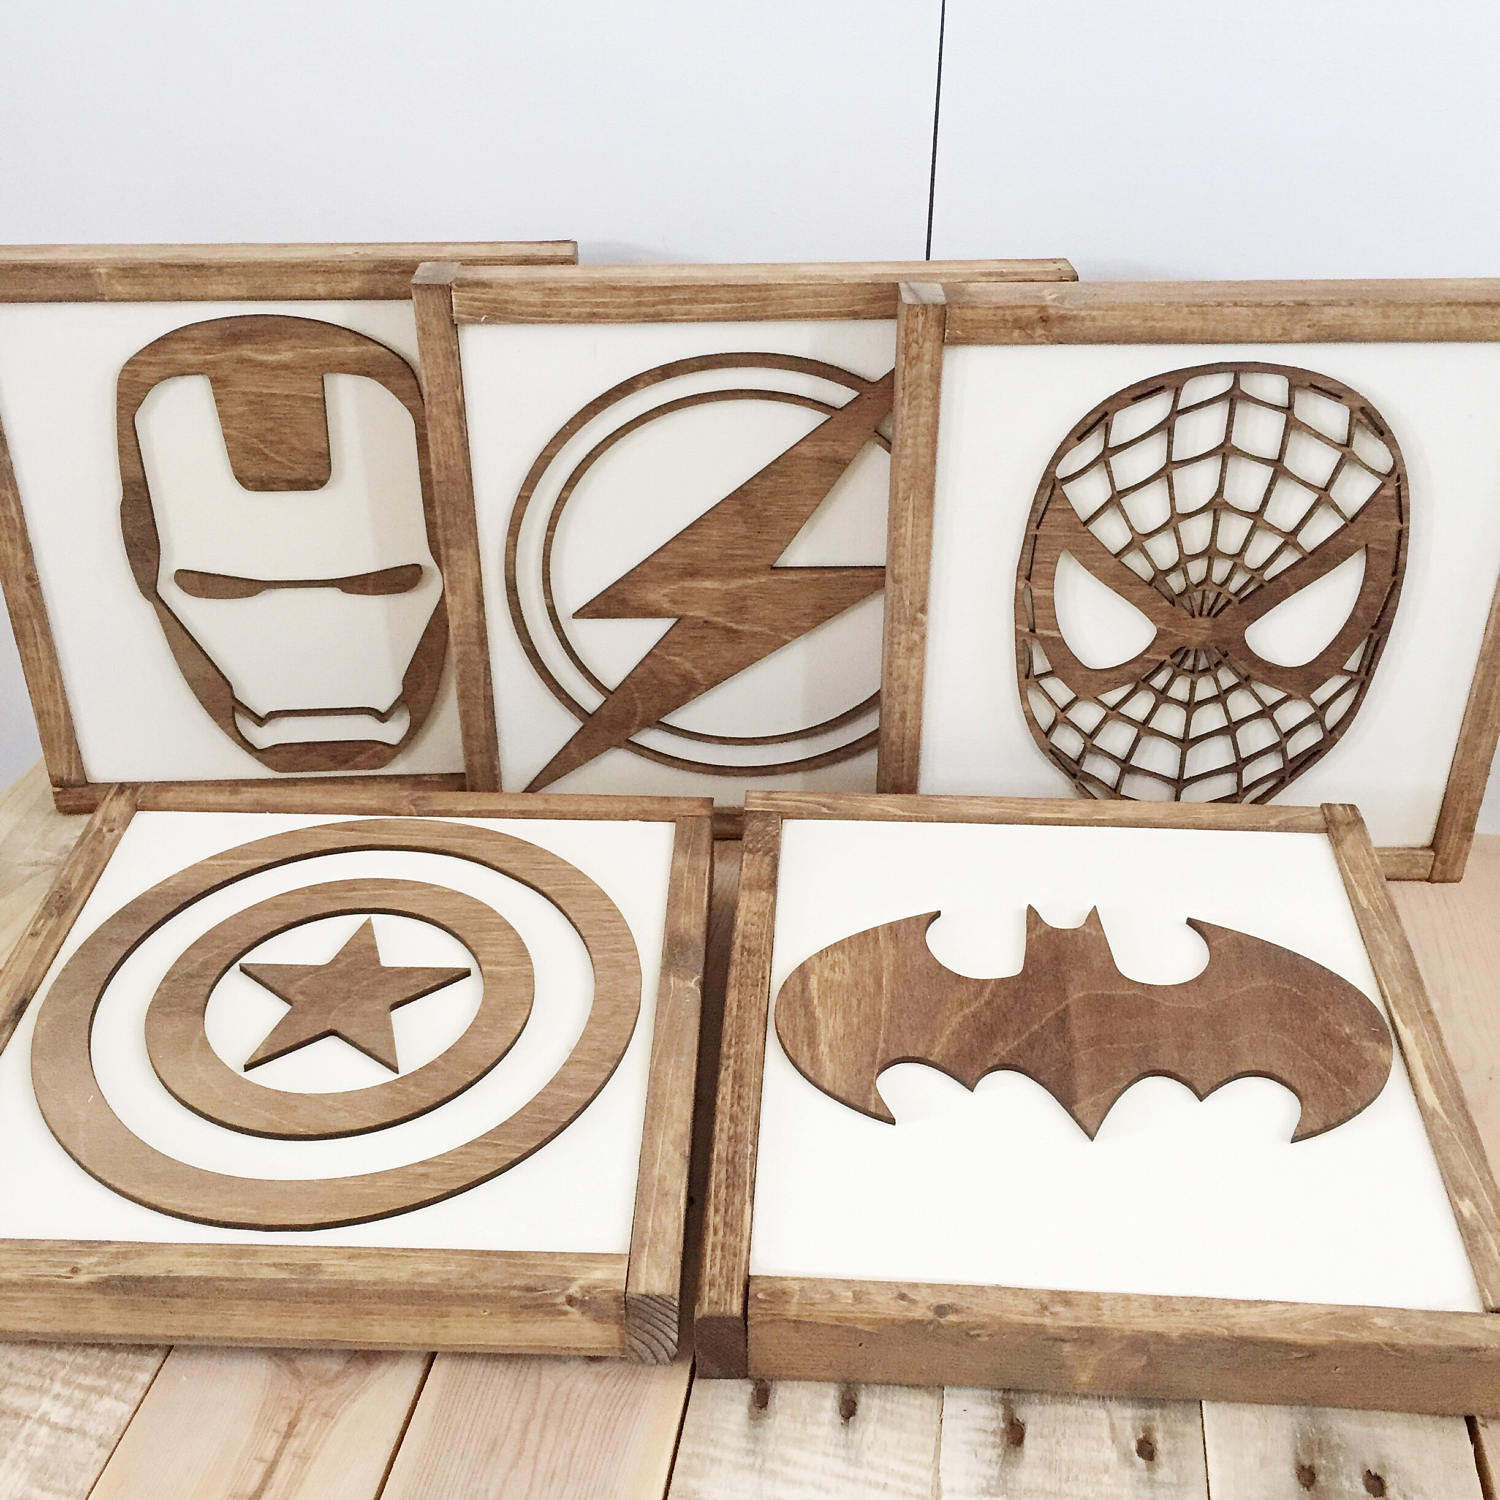 Sign The Wood Art Sign | 11x11 – inch Wall Handmade Superhero